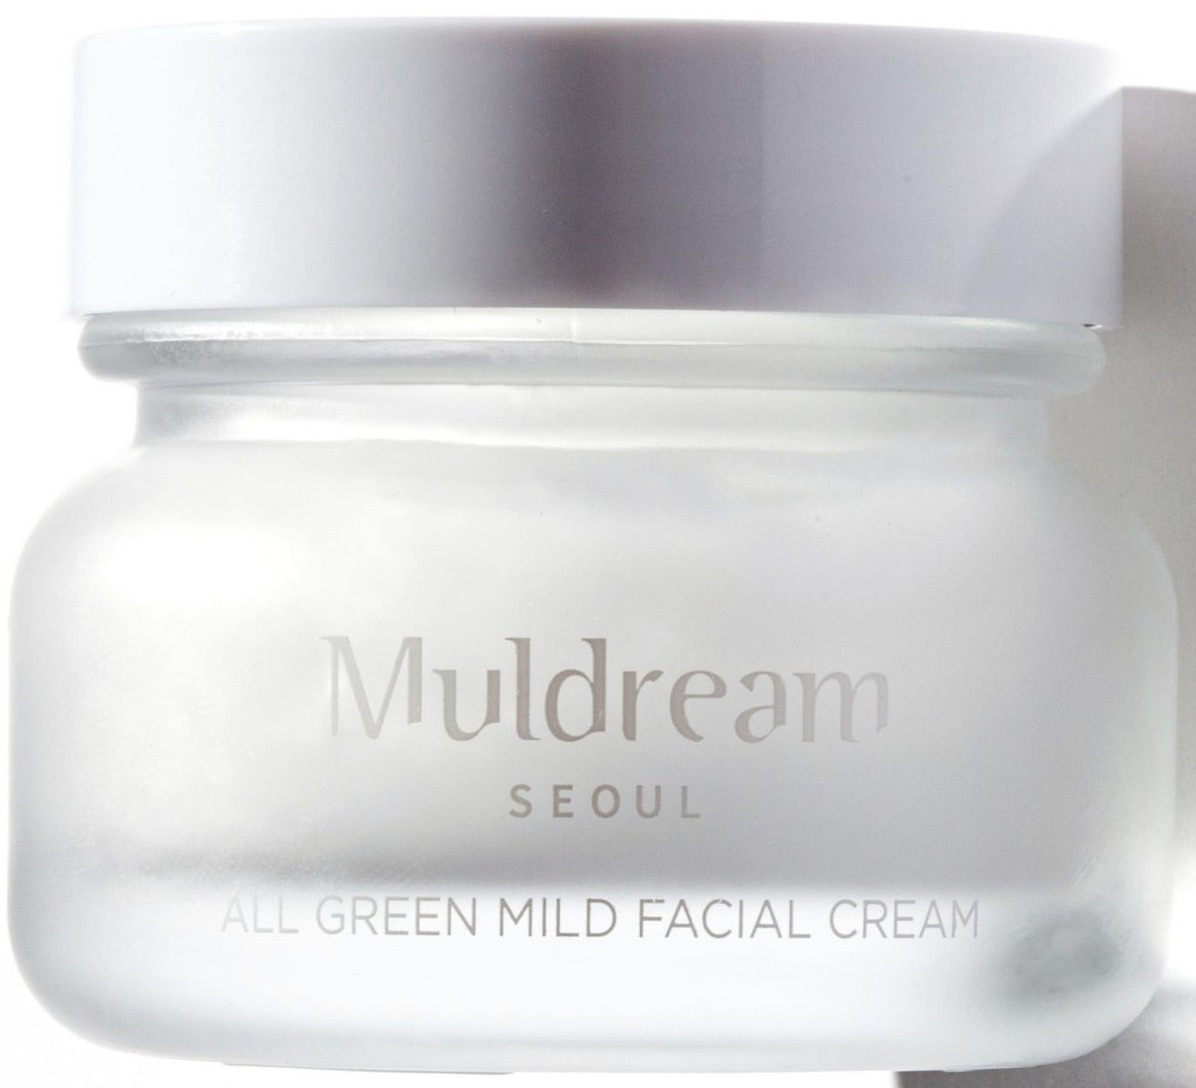 Muldream Seoul All Green Mild Facial Cream